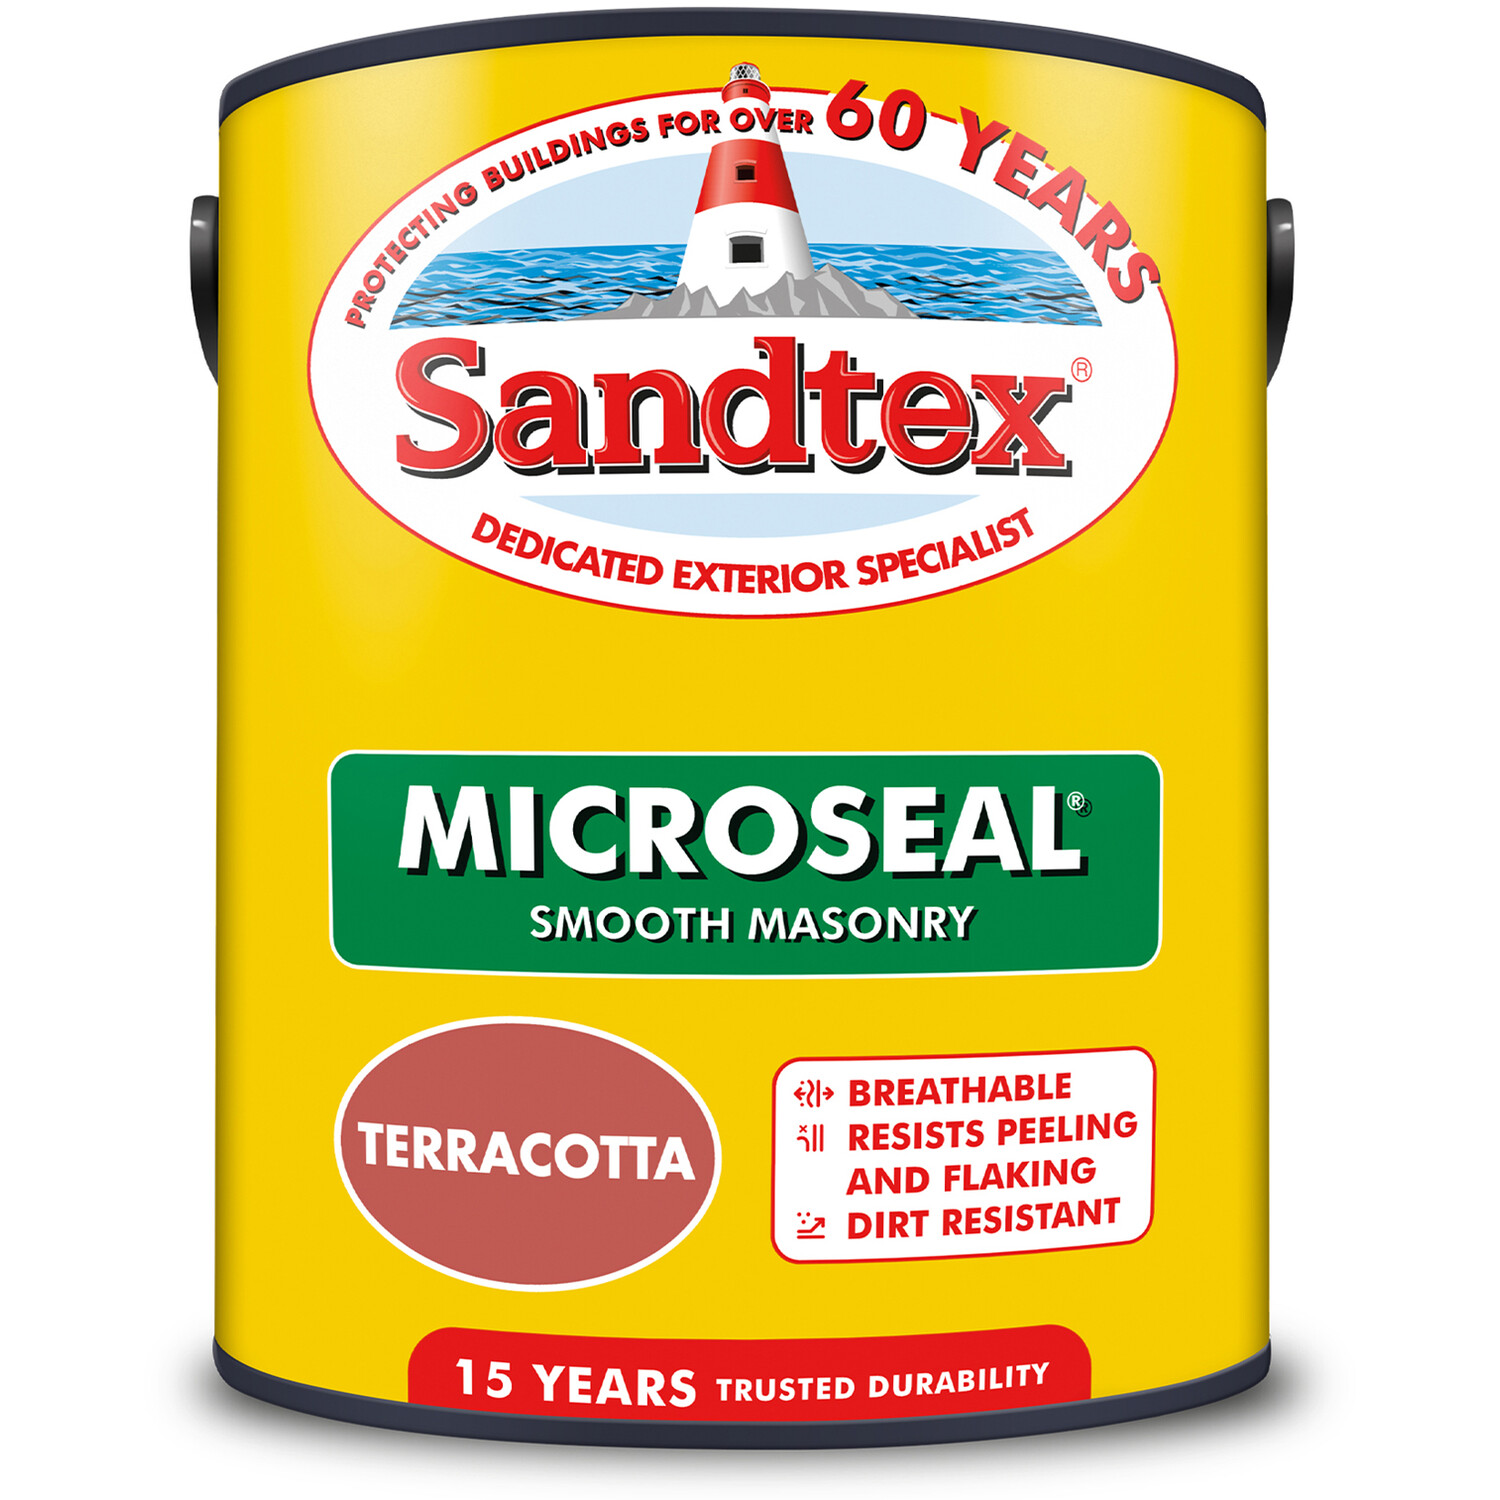 Sandtex Walls Terracotta Microseal Smooth Masonry Matt Paint 5L Image 2